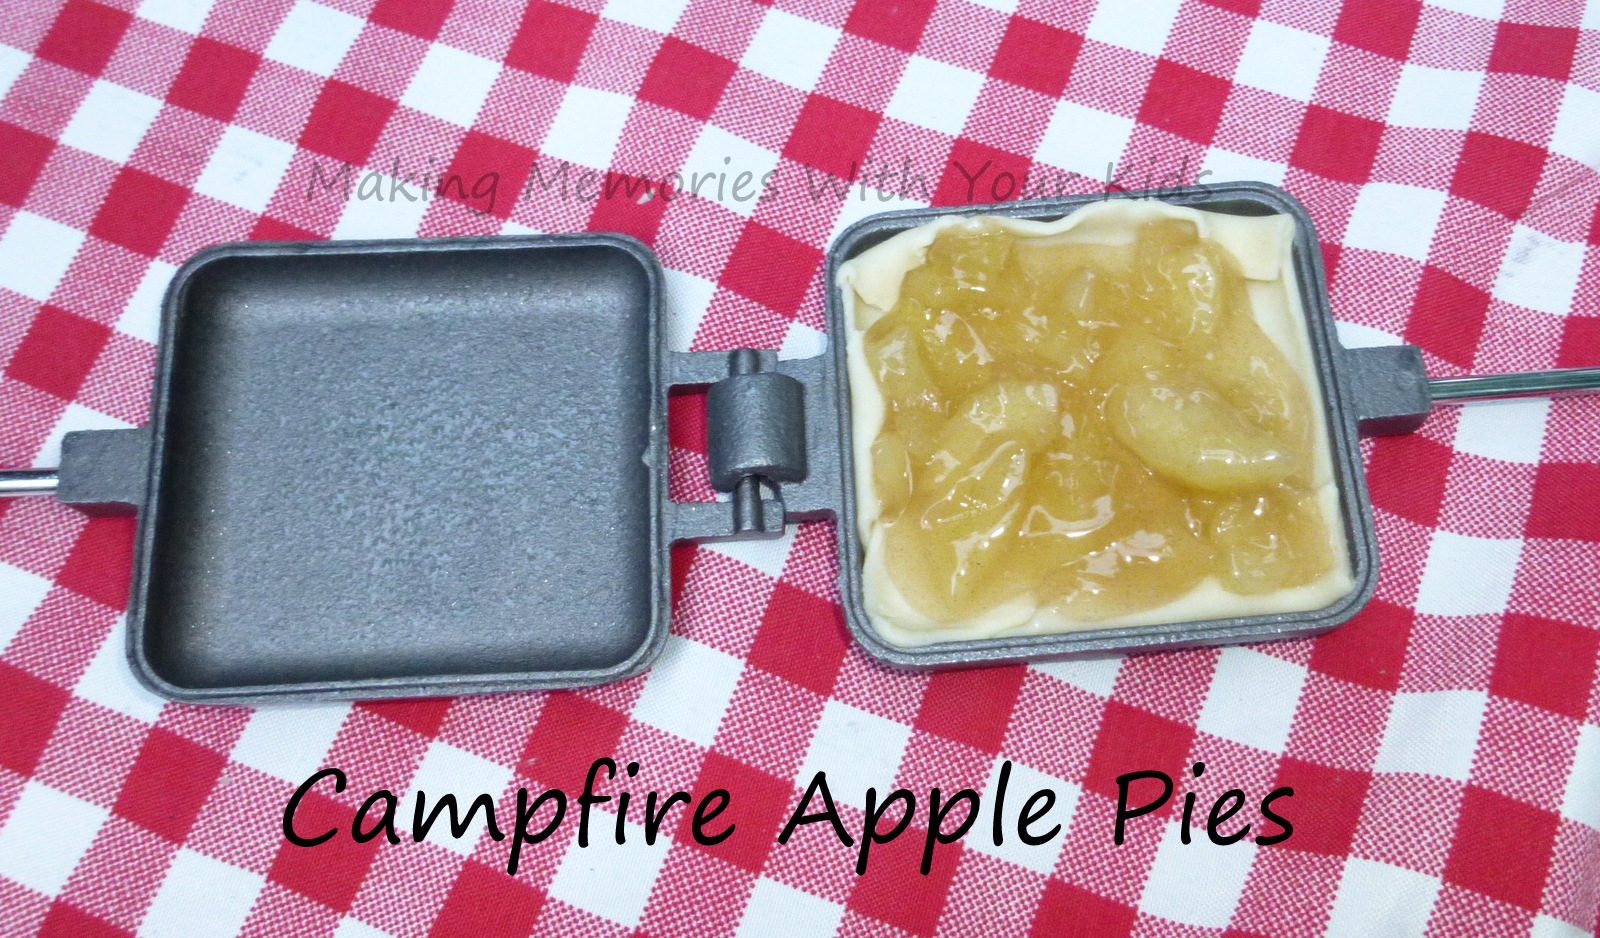 http://makingmemorieswithyourkids.com/wp-content/uploads/2013/07/campfire-apple-pies.jpg